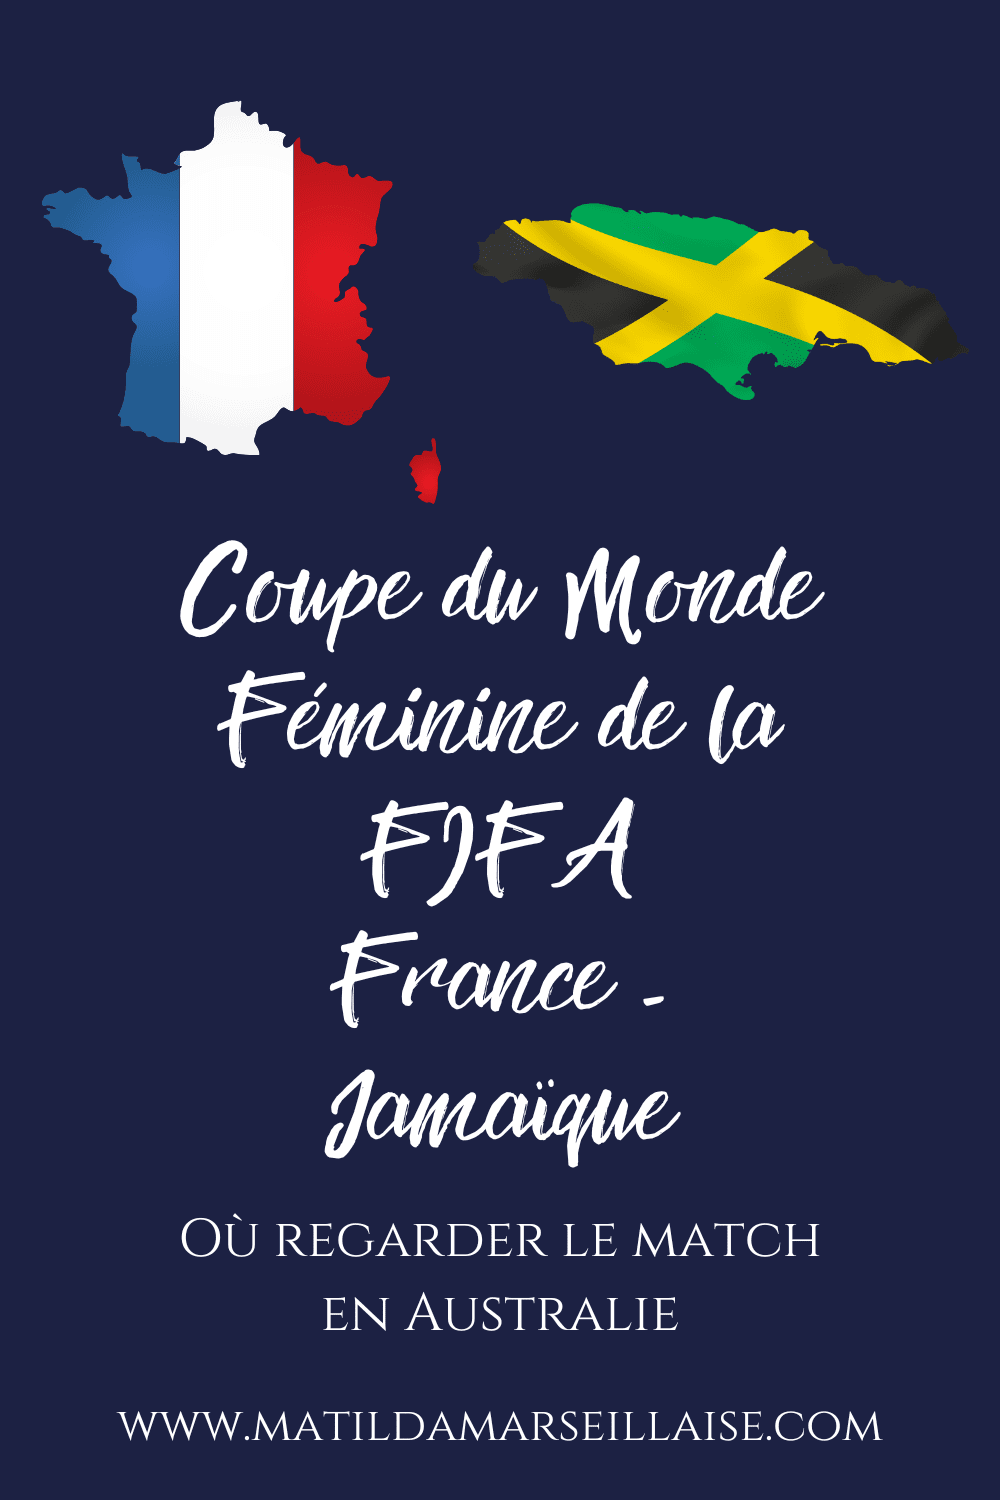 France - Jamaïque